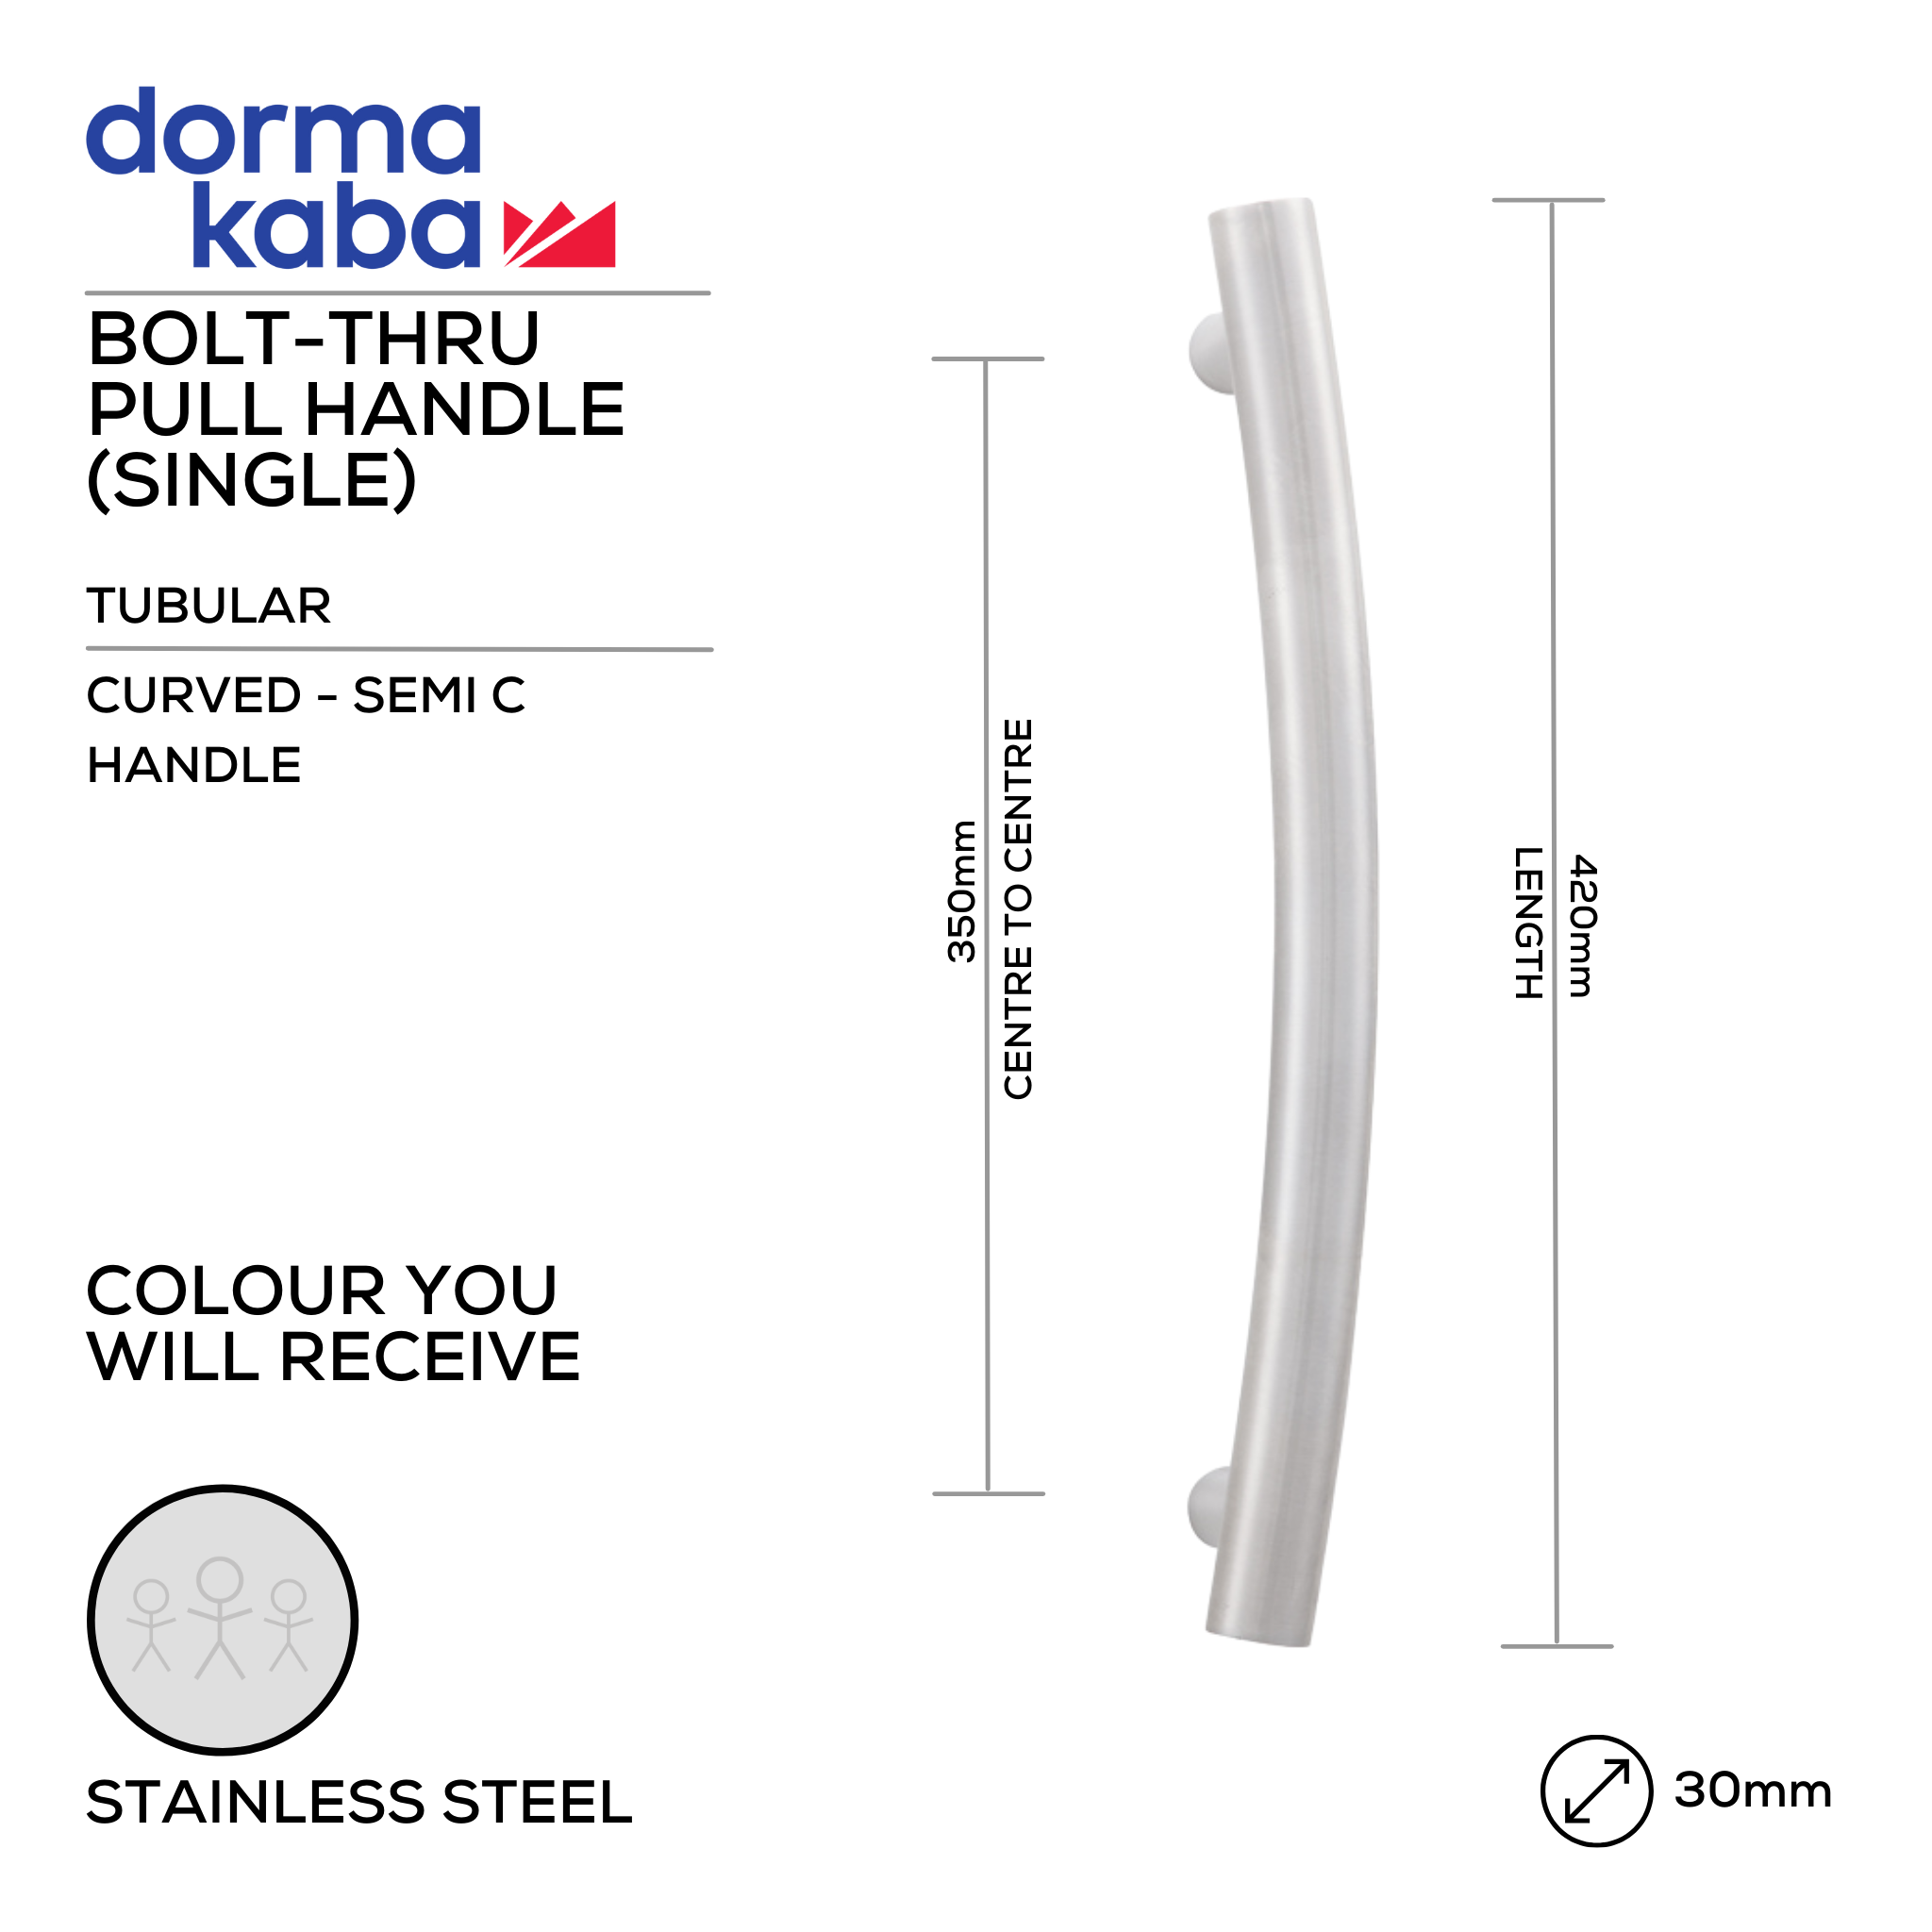 DPH 208 BT, Pull Handle, Tubular, Curved, Semi C Handle, BoltThru, 30mm (Ø) x 420mm (l) x 350mm (ctc), Stainless Steel, DORMAKABA